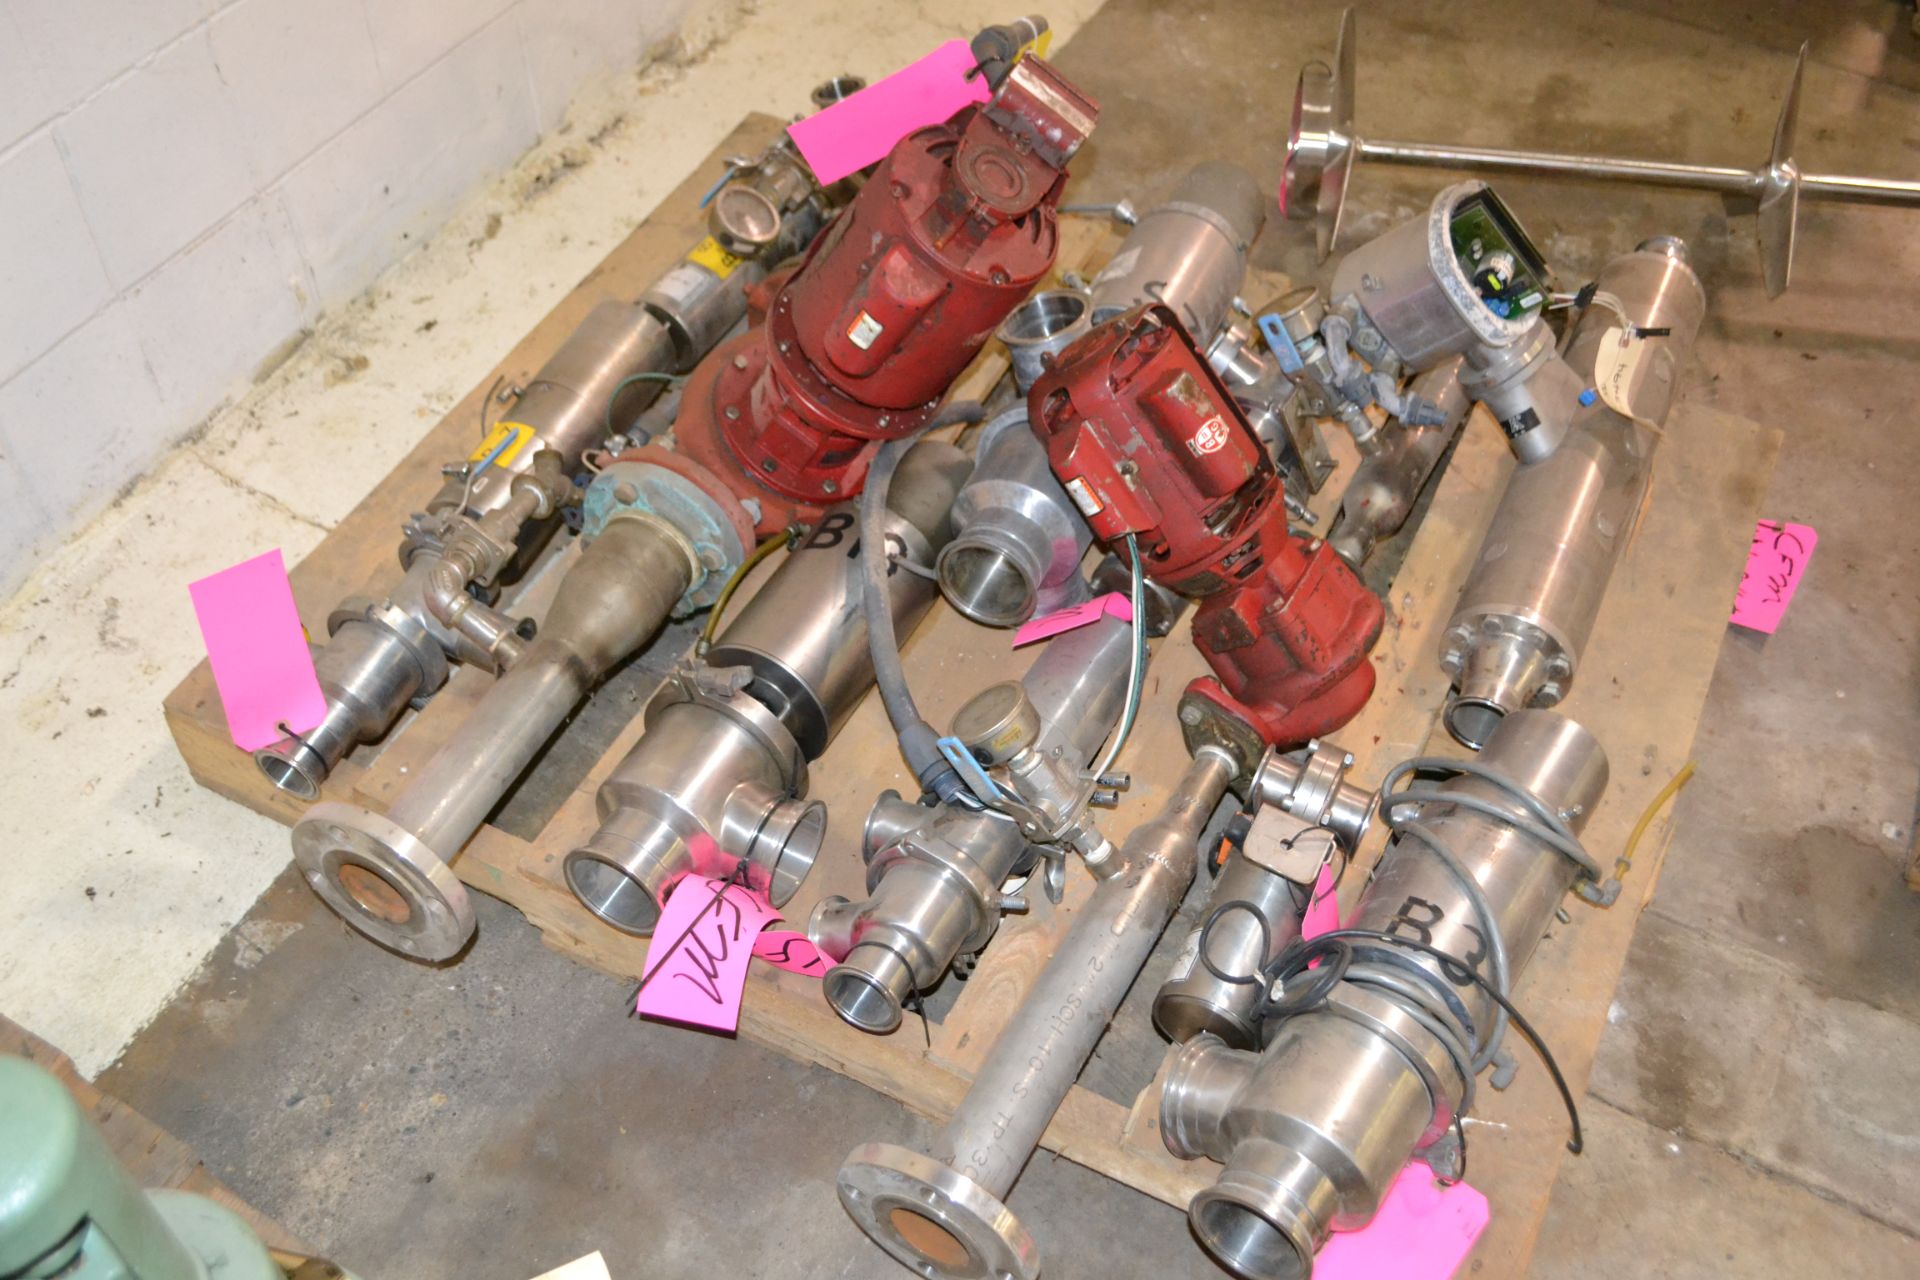 Lot of circulating pumps, air actuators, and flow meters, RIGGING FEE $25 - Image 2 of 2